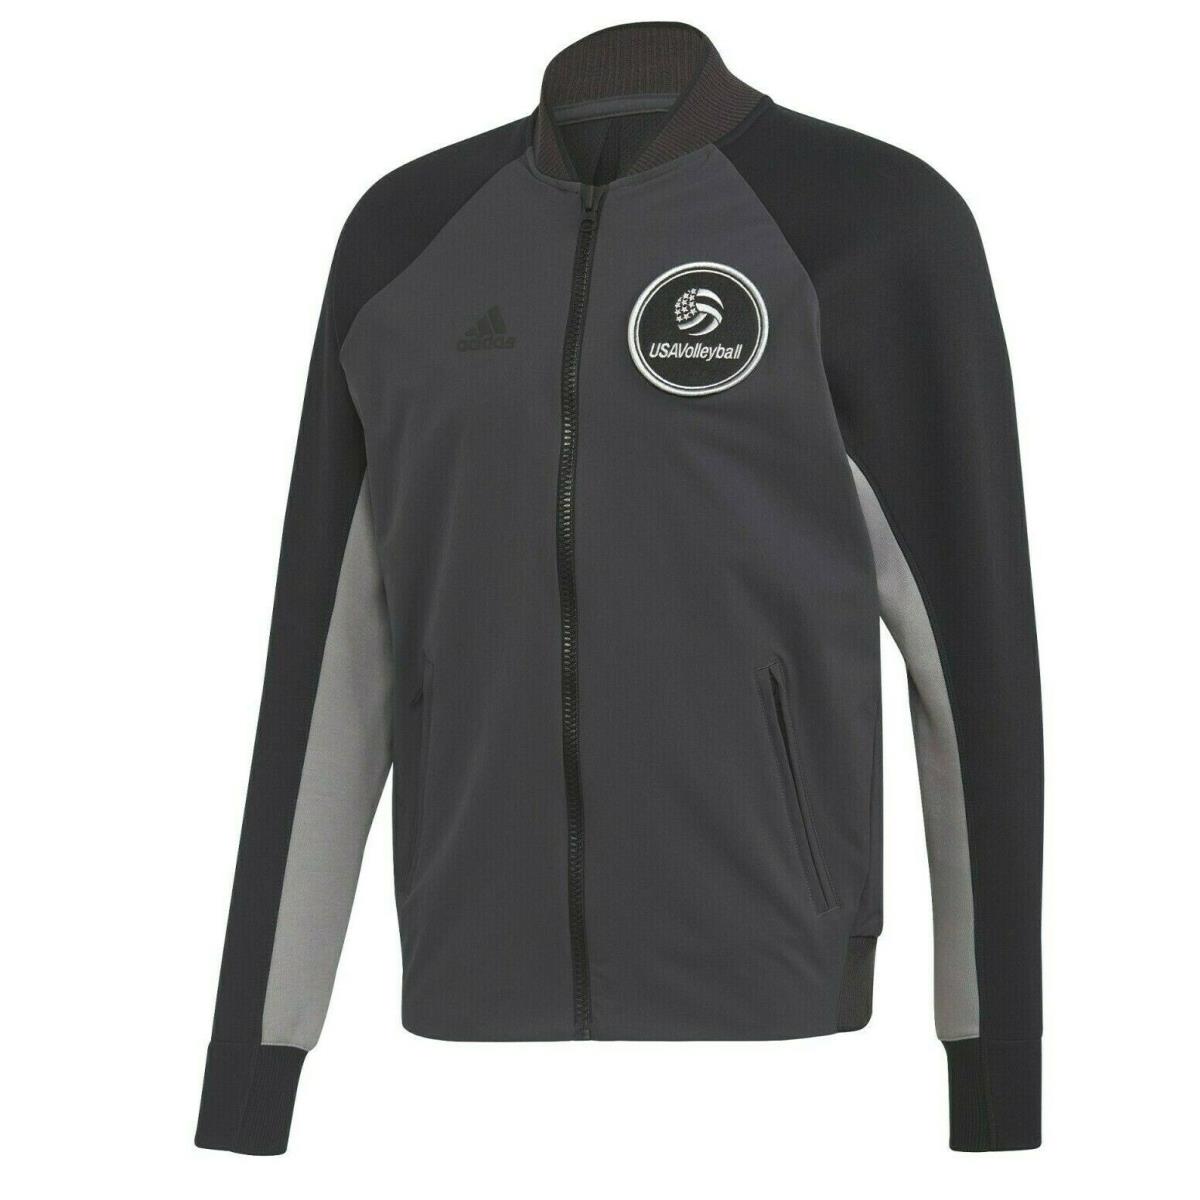 Adidas Usa Volleyball Vrct Men s Jacket FQ2625 XL - Black/gray